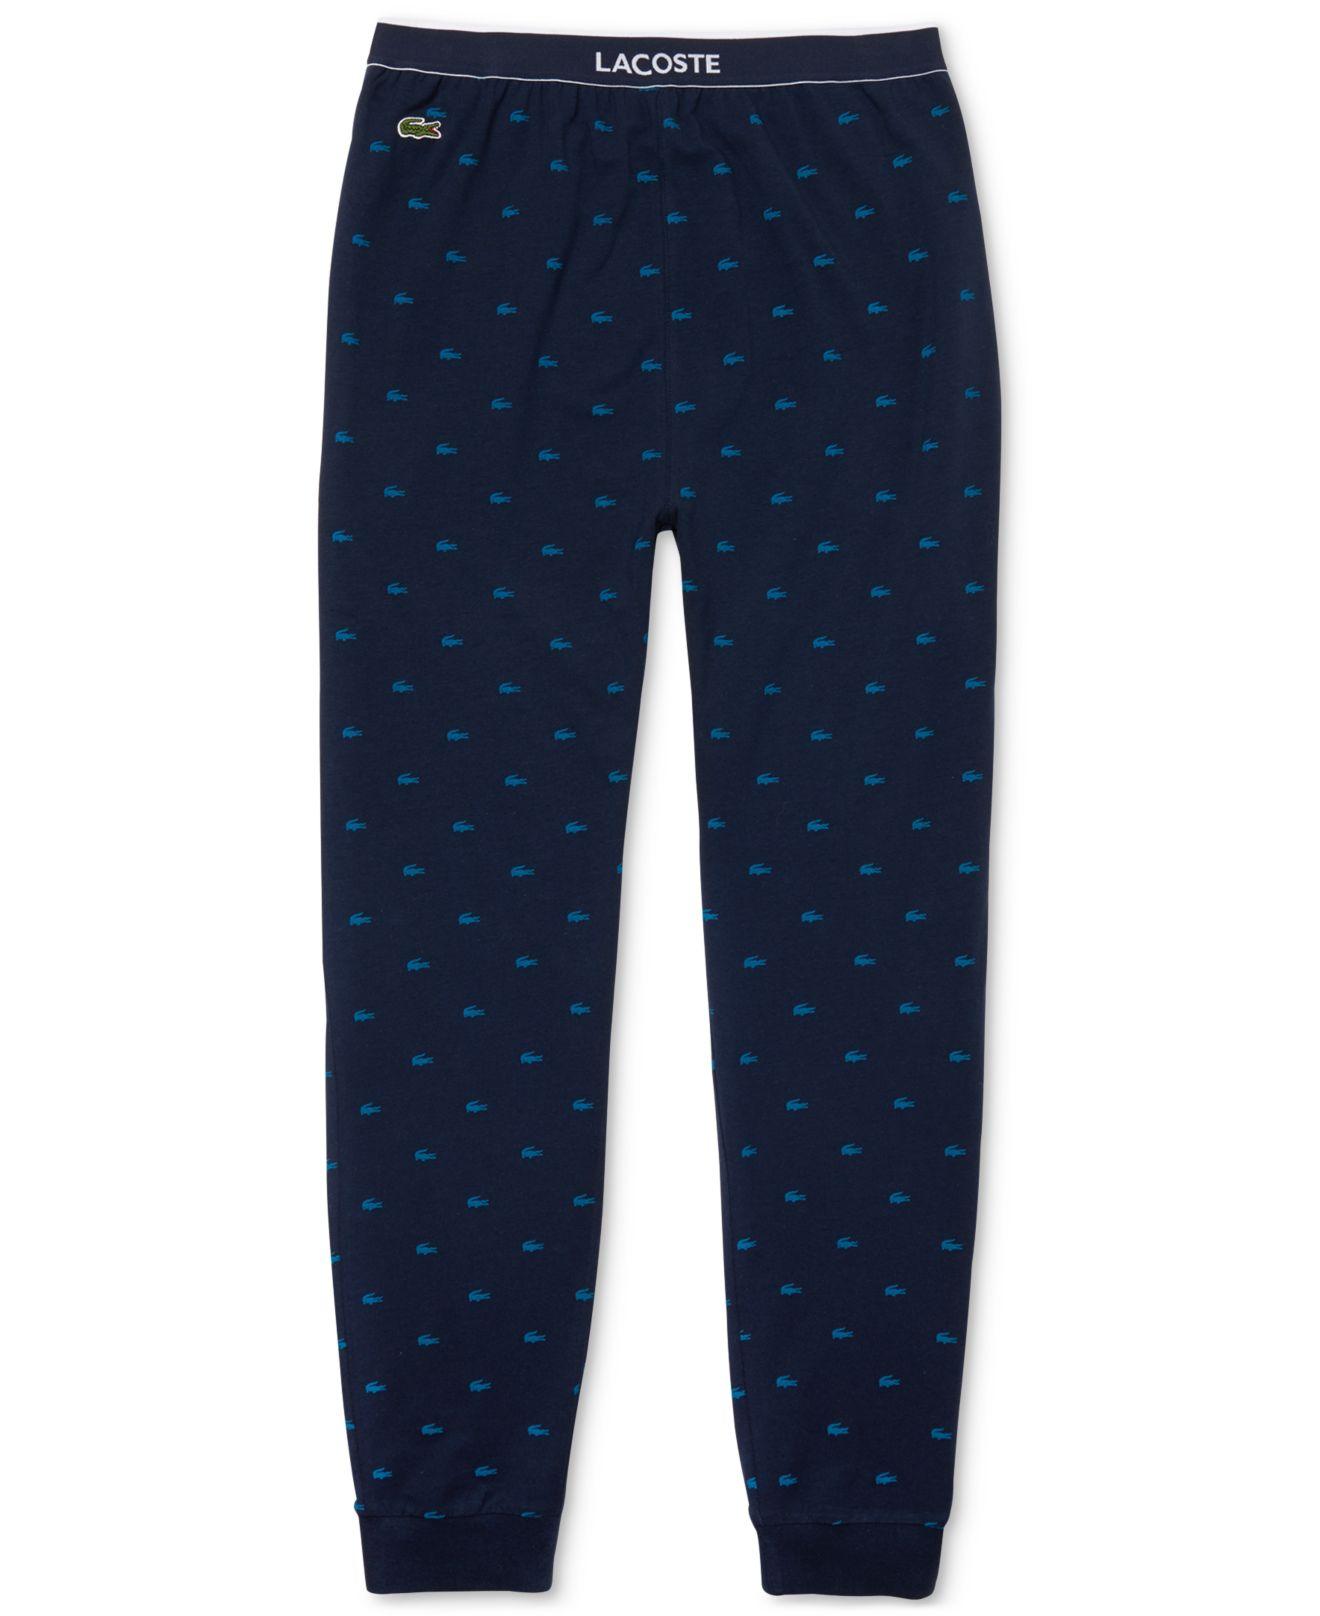 lacoste pajama pants off 60% - online 